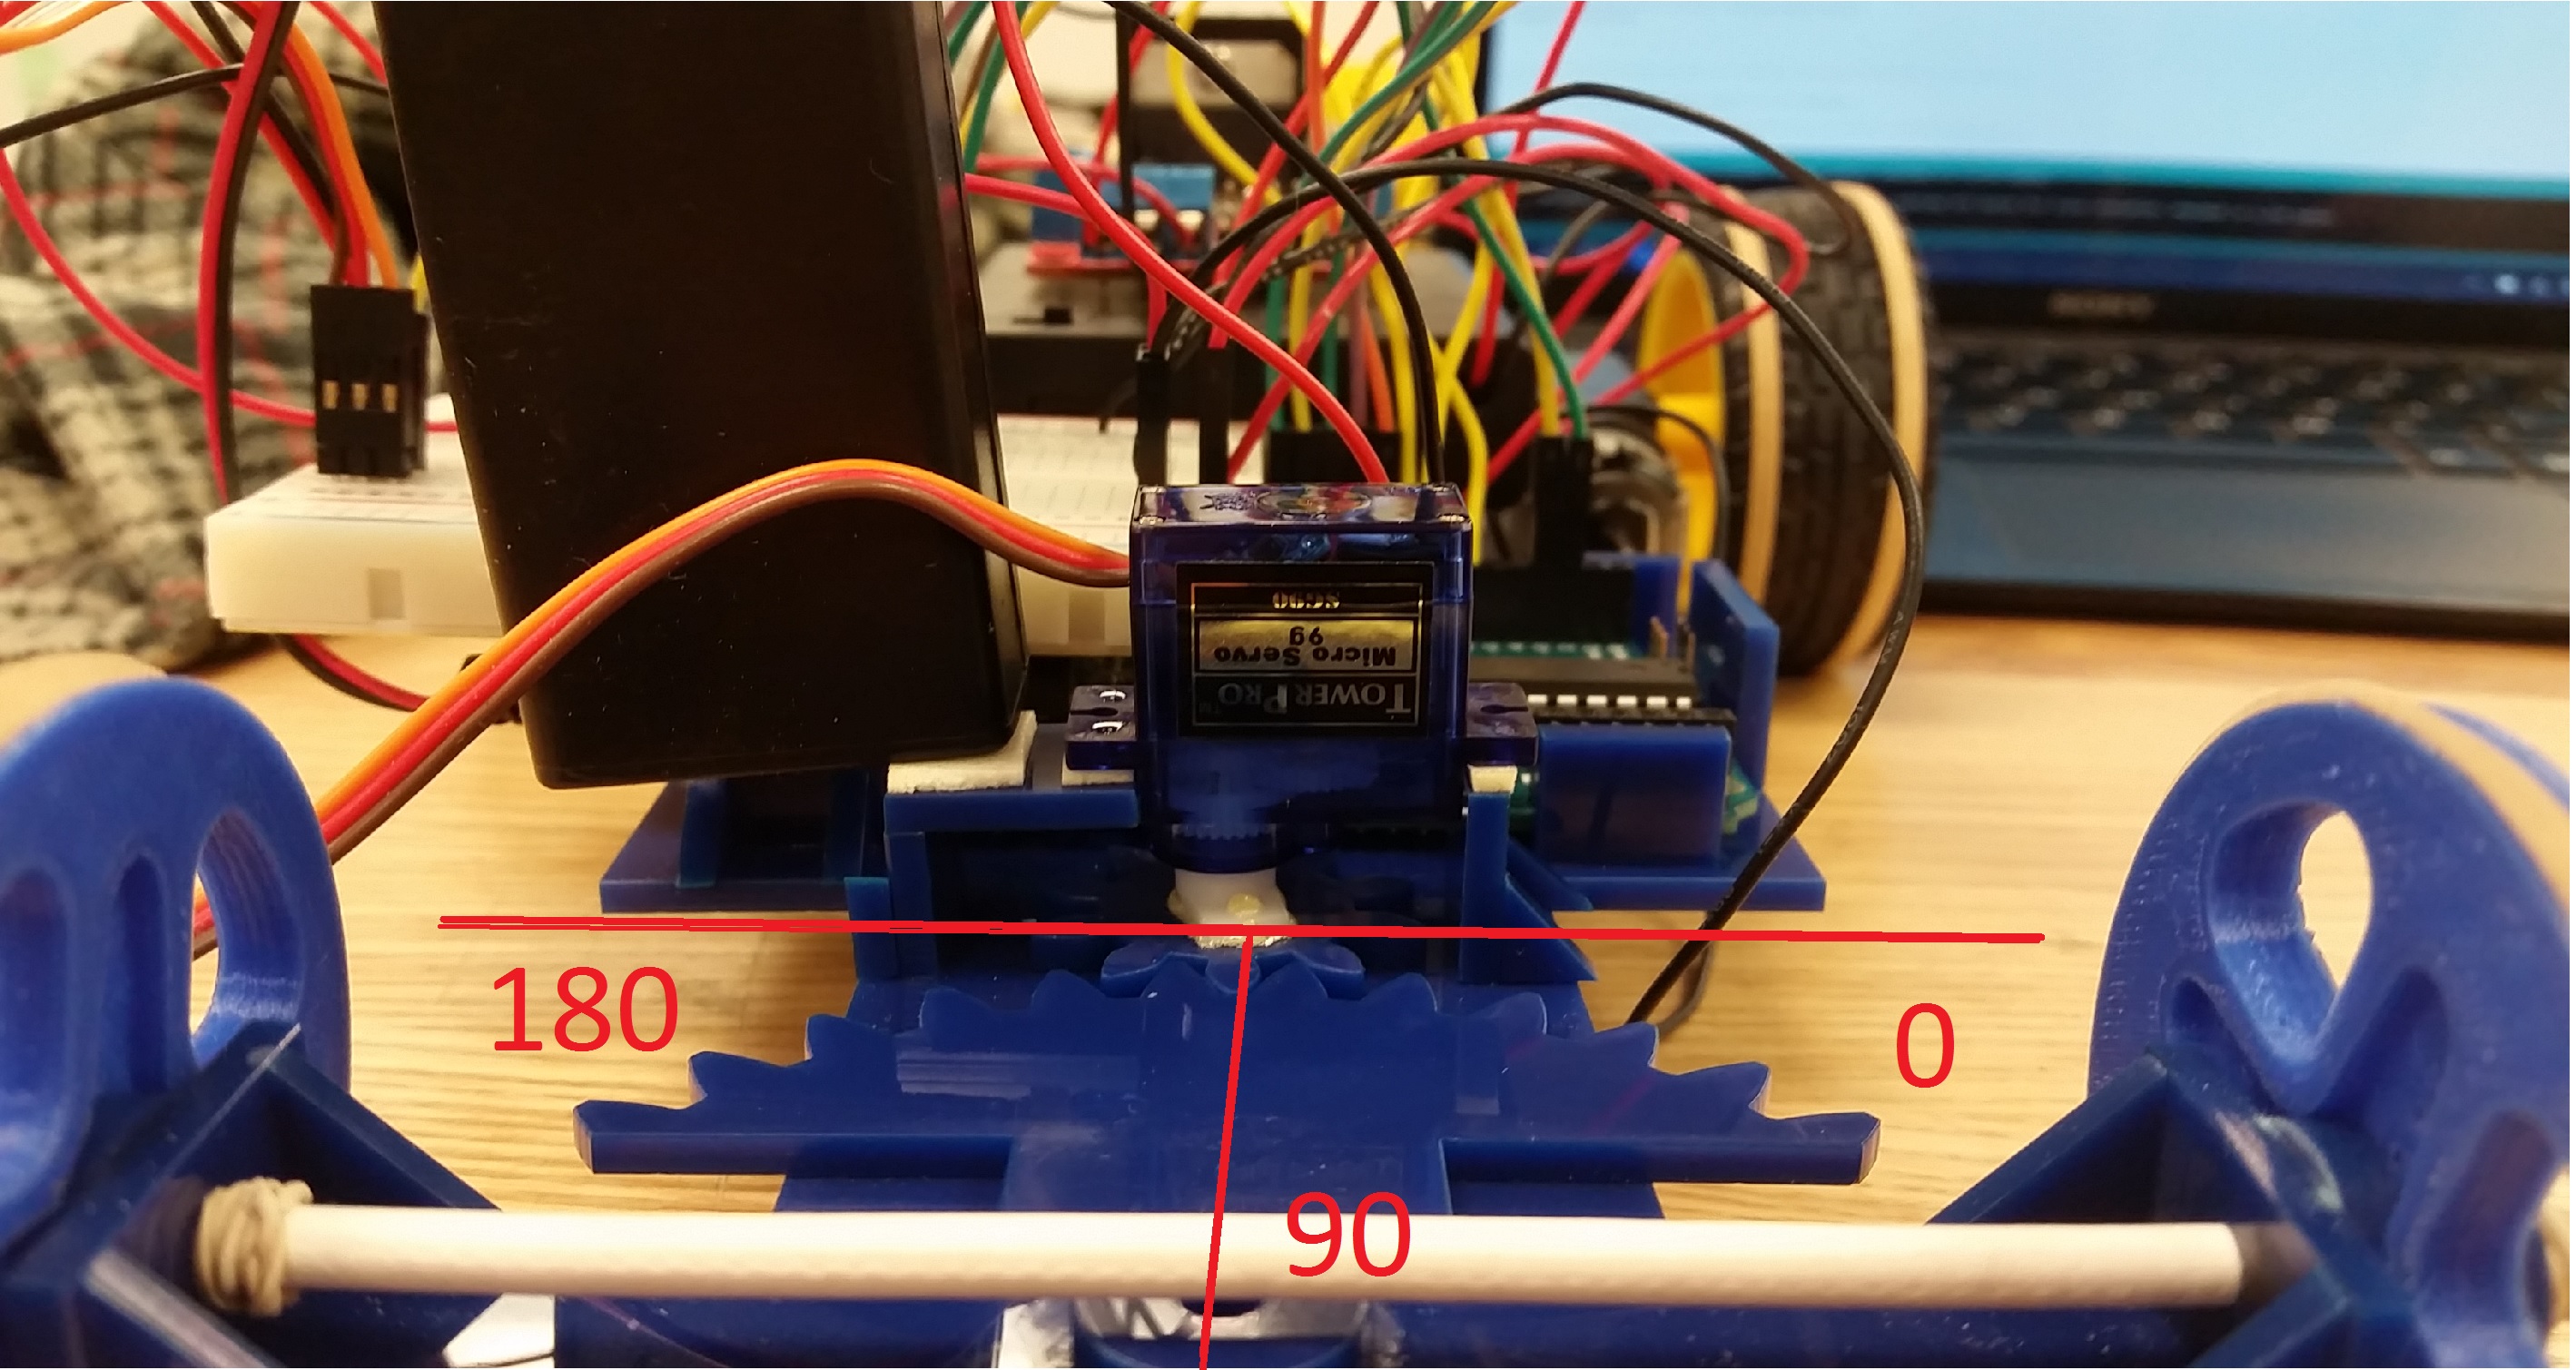 program servo motor arduino to rotate left by 30 degree